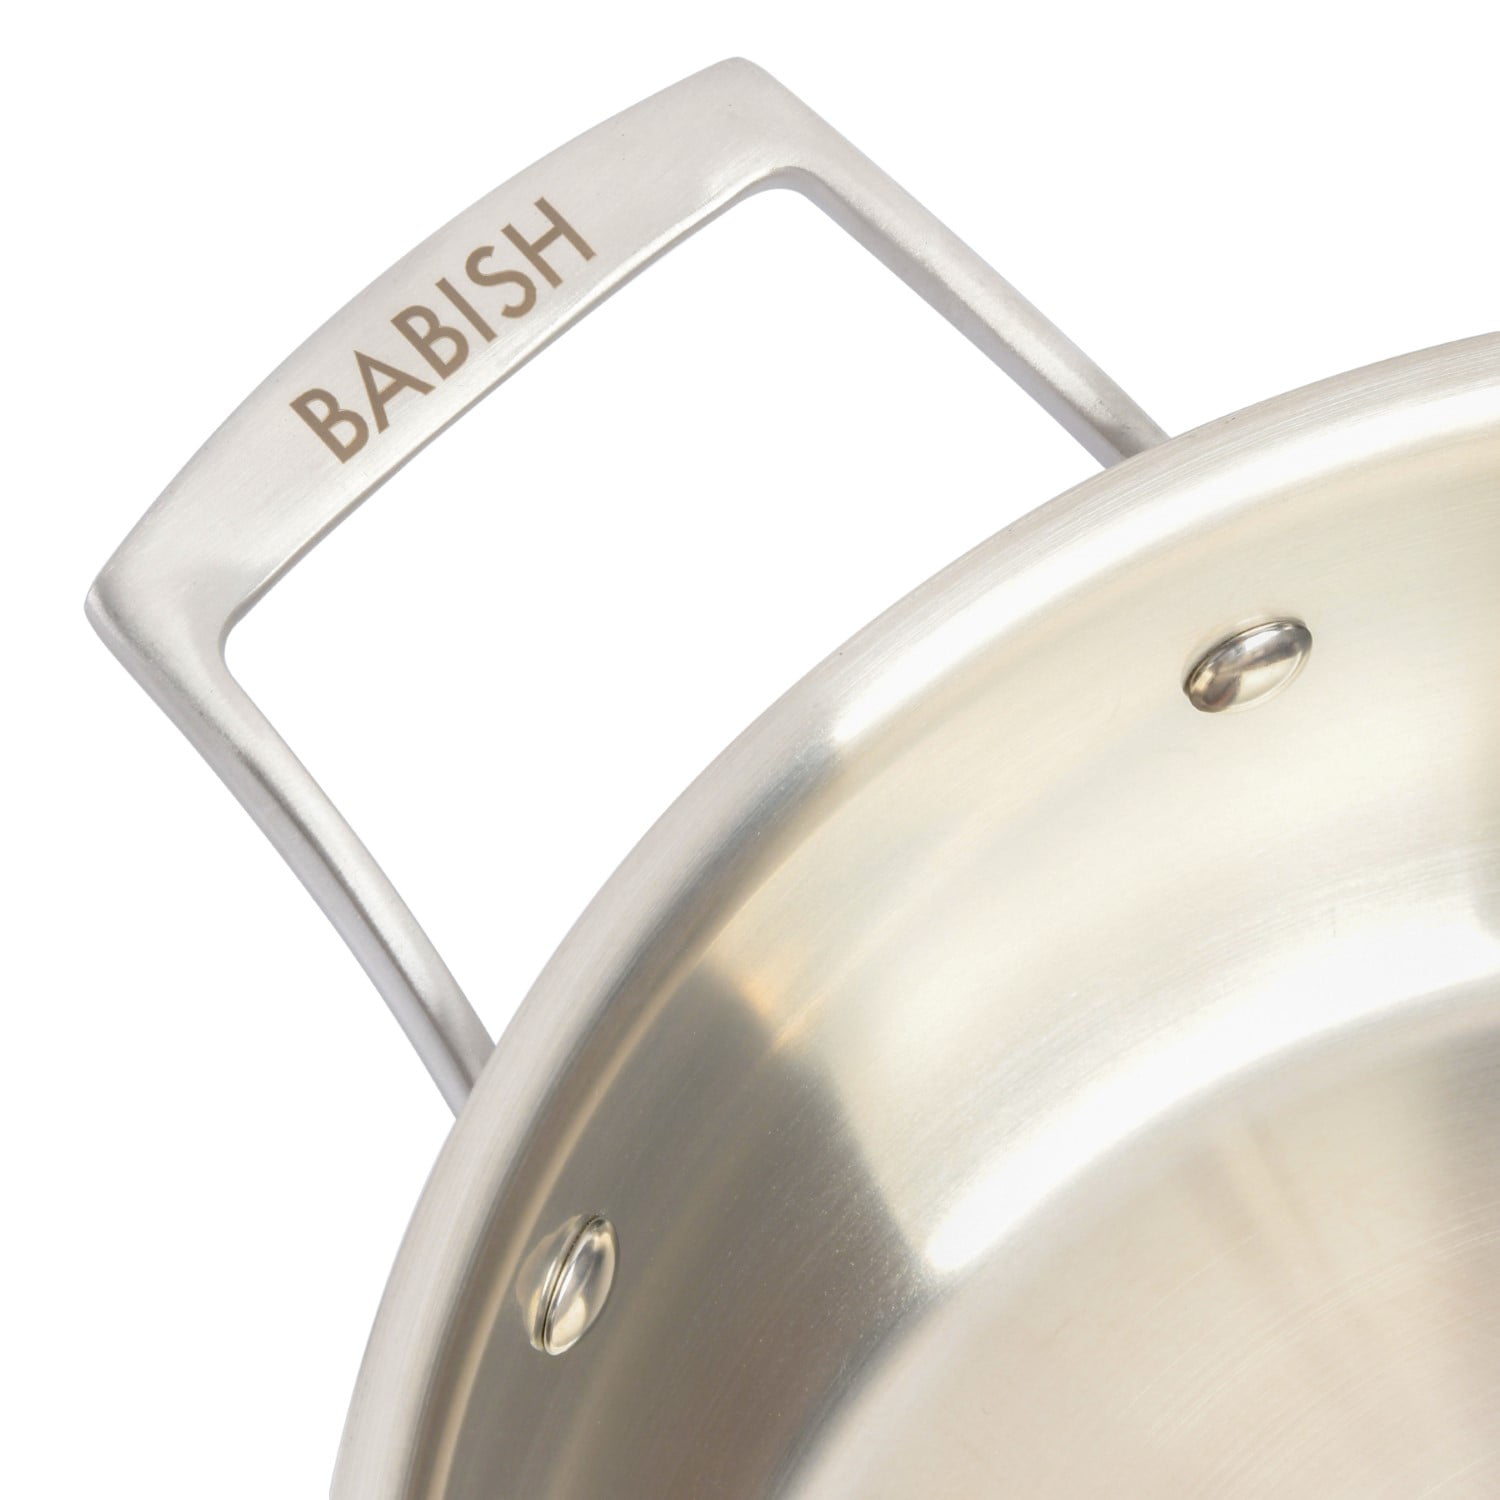 Babish Stainless Steel Mixing Bowl Set (1.5-Quart, 3-Quart, 5-Quart)